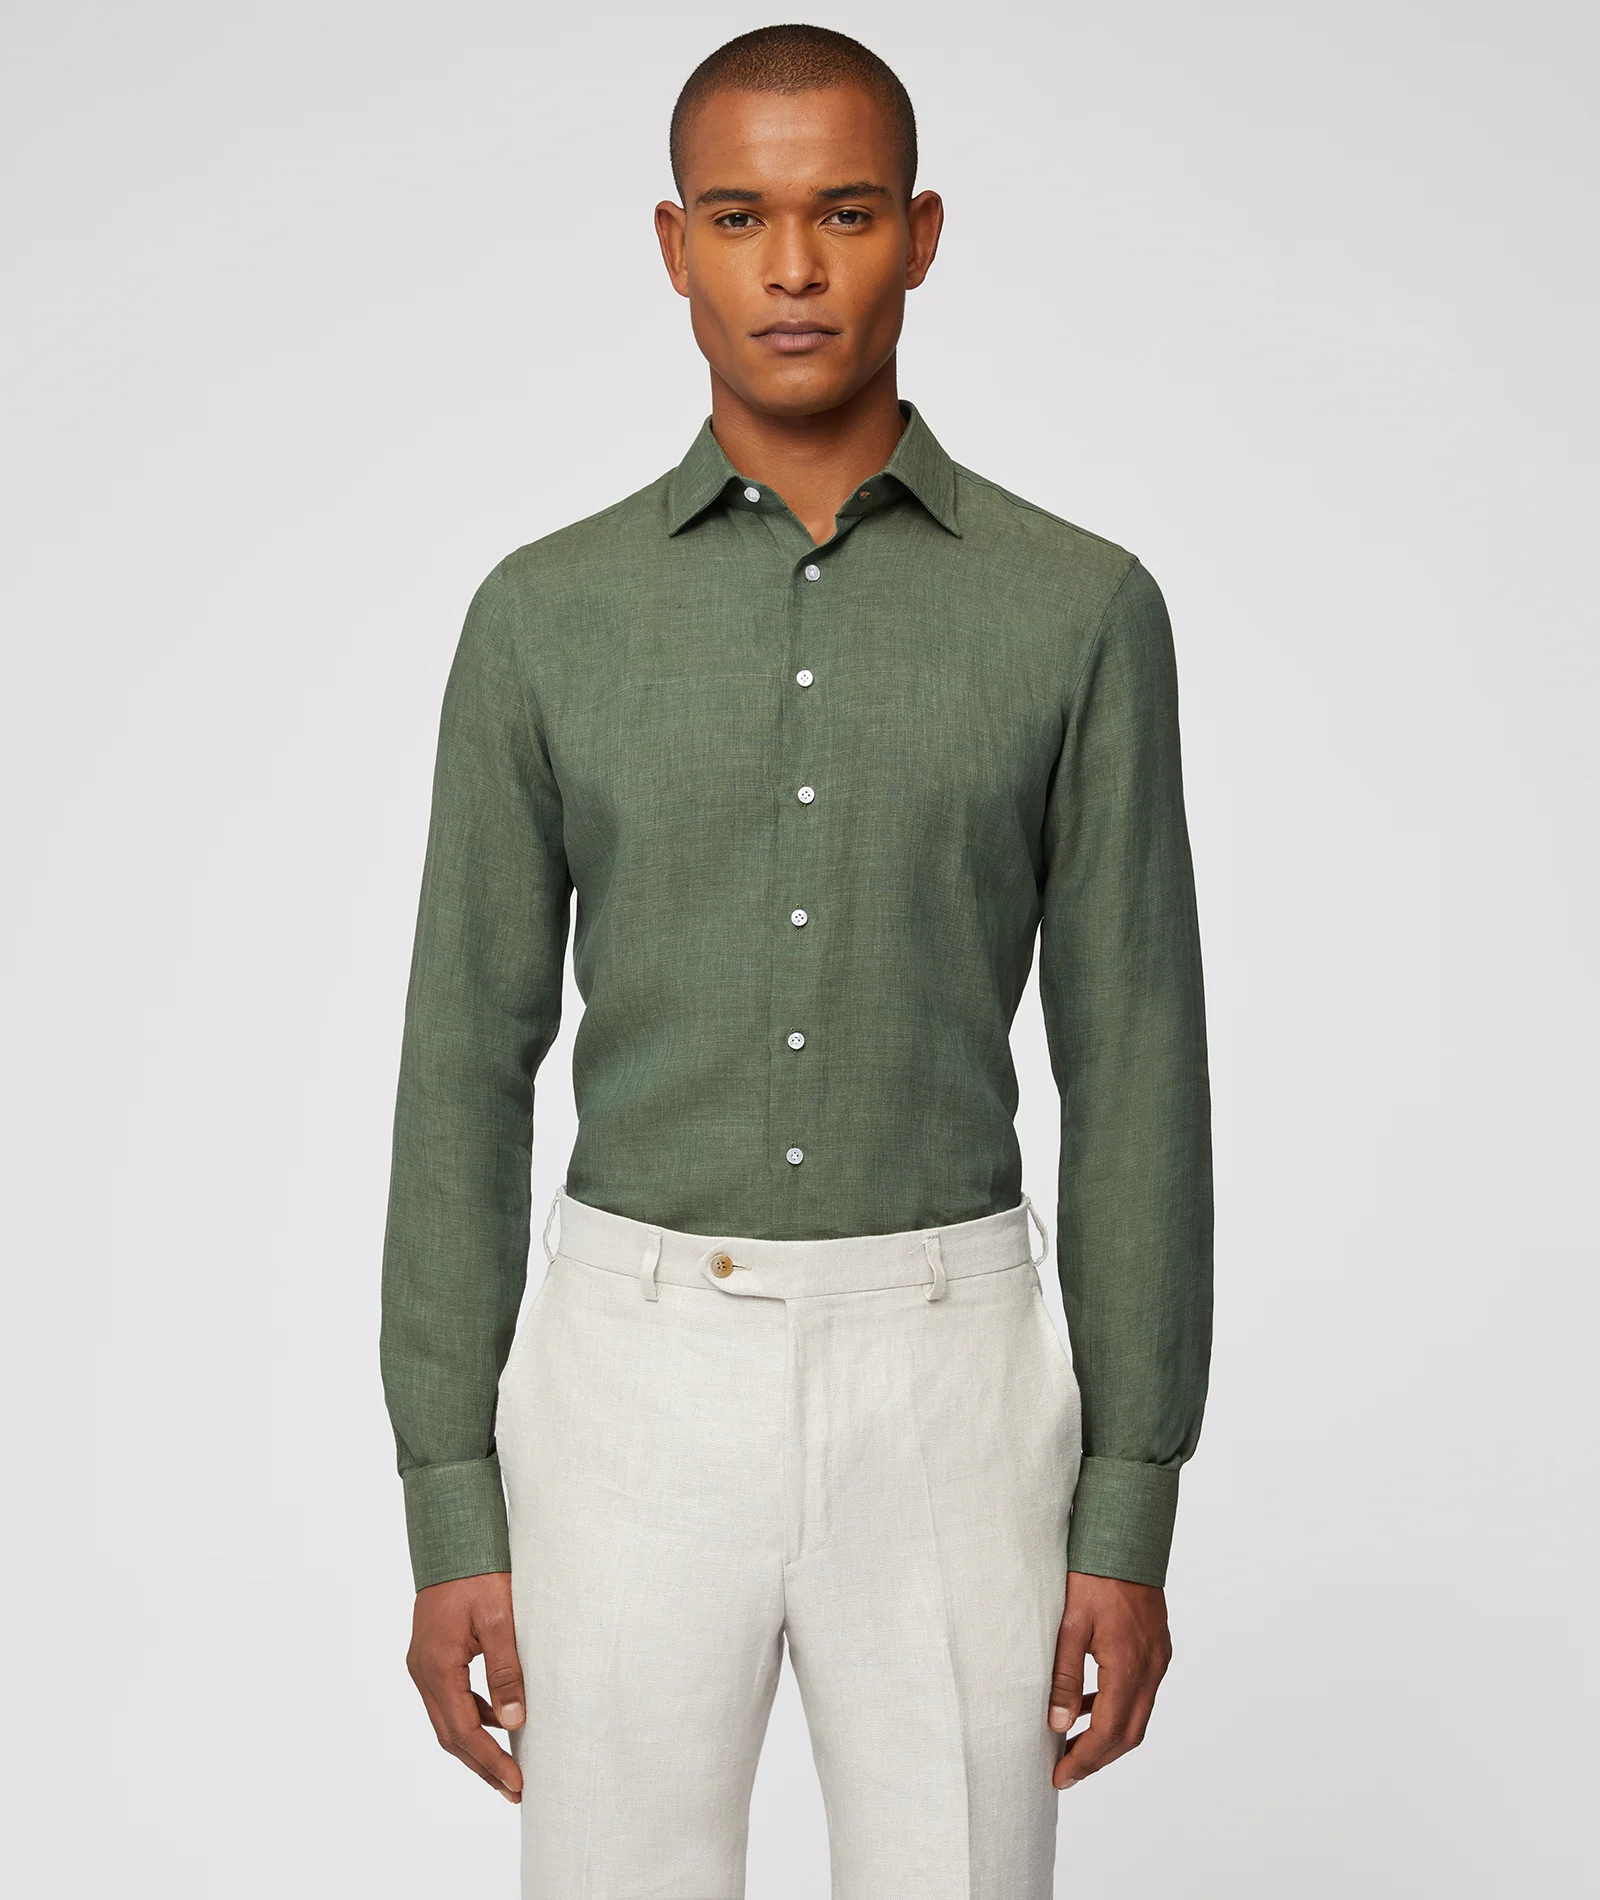 Lanieri, Made-to-measure Men’s Sage Green Linen Shirt - Green 100% Linen Shirt for Man, Size: Os - Customizable